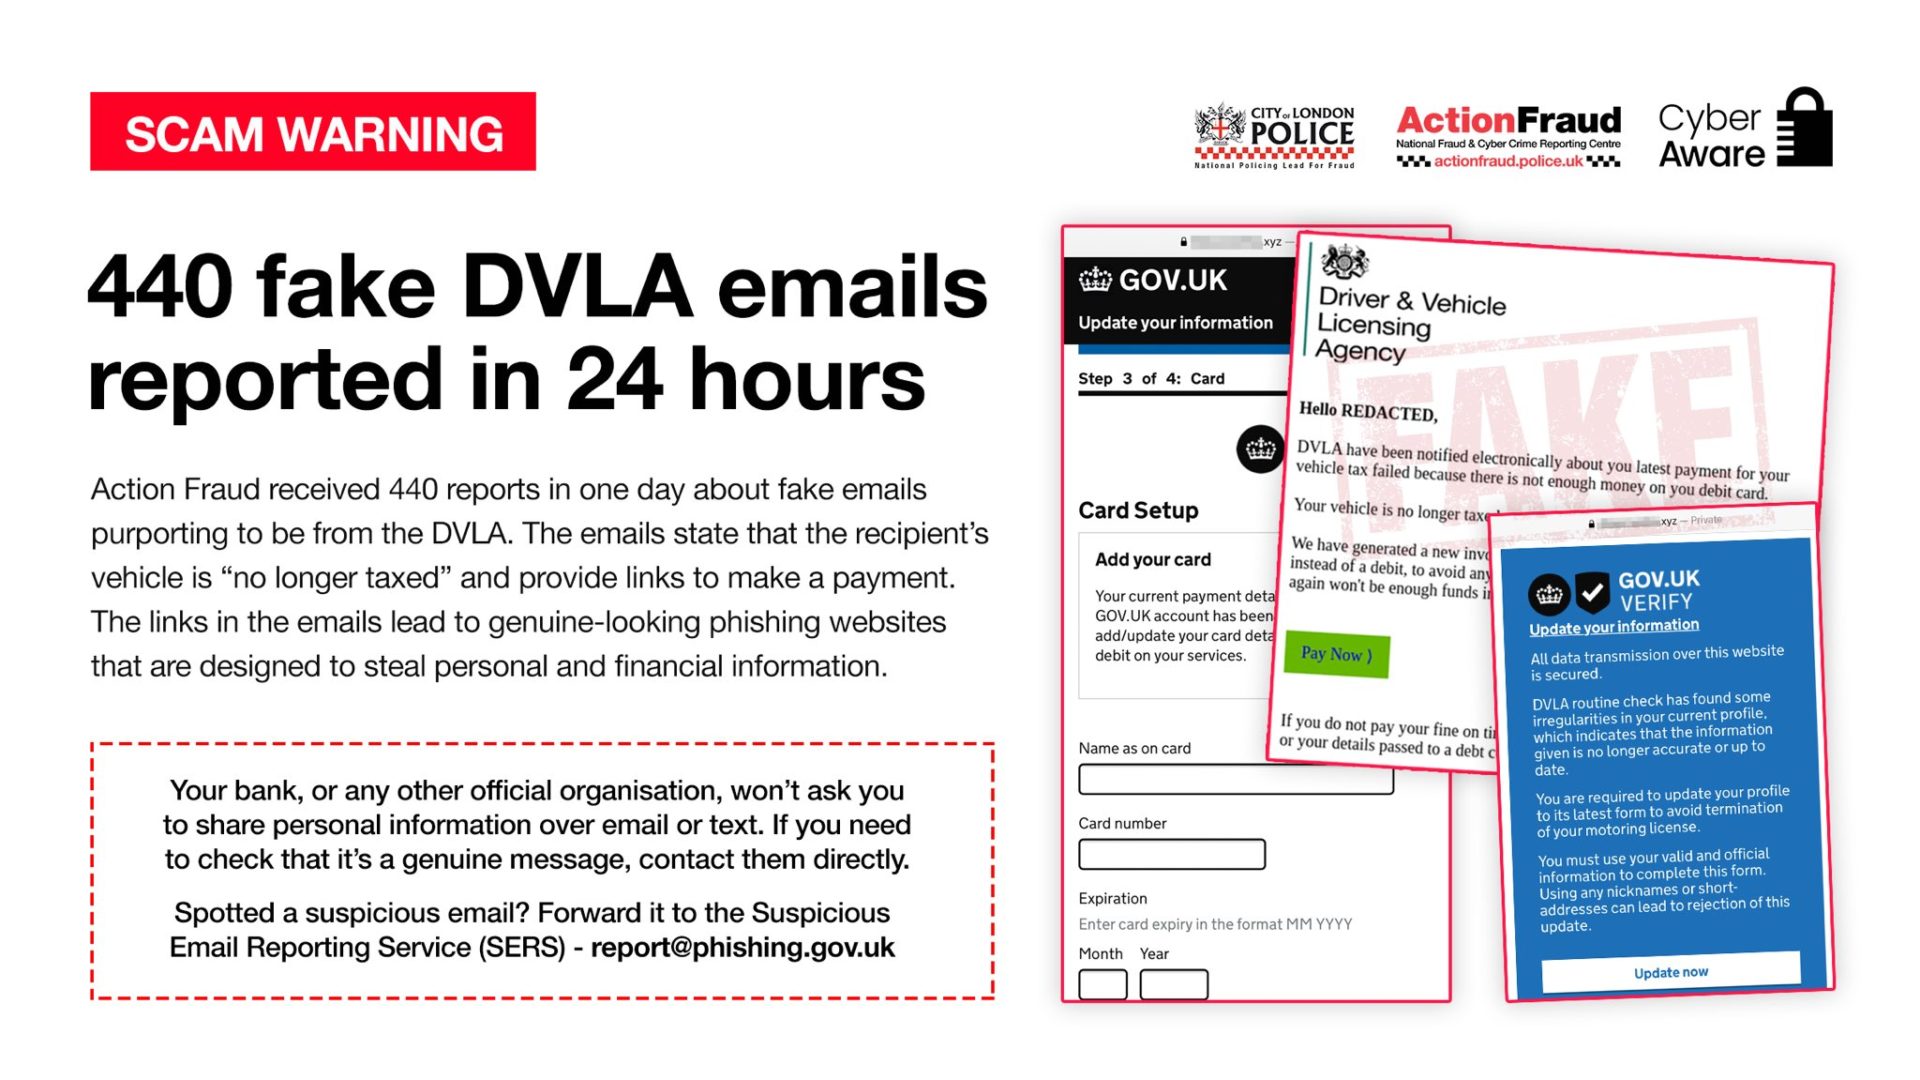 DVLA Scam Action Fraud Image